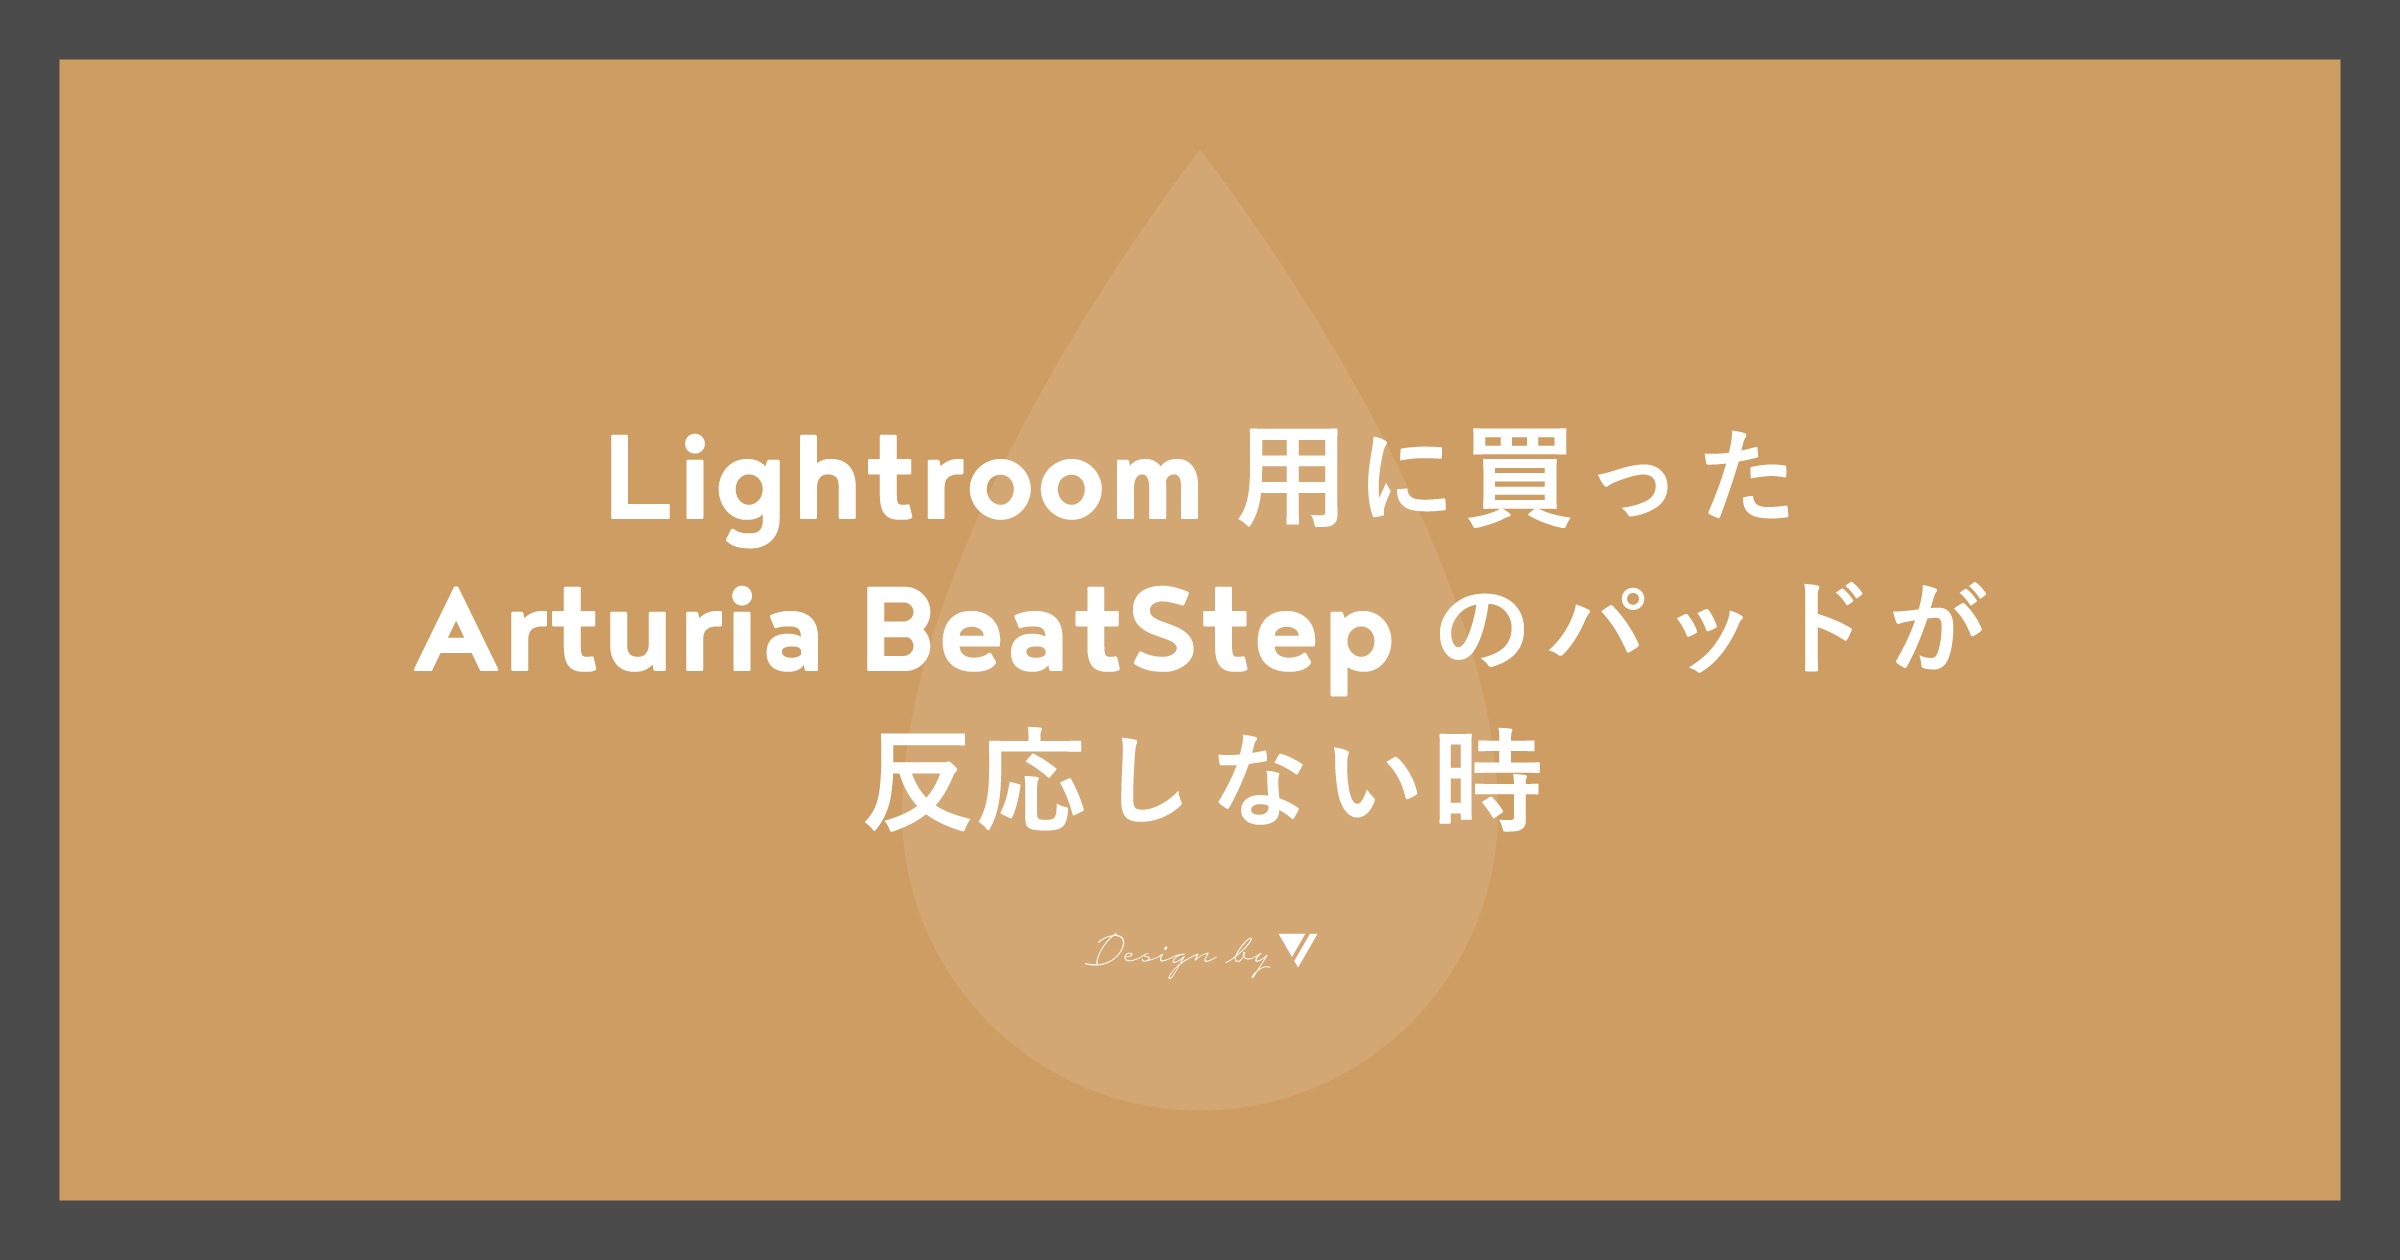 「Lightroom用に買ったArturia BeatStepのパッドが反応しない時」のアイキャッチ画像